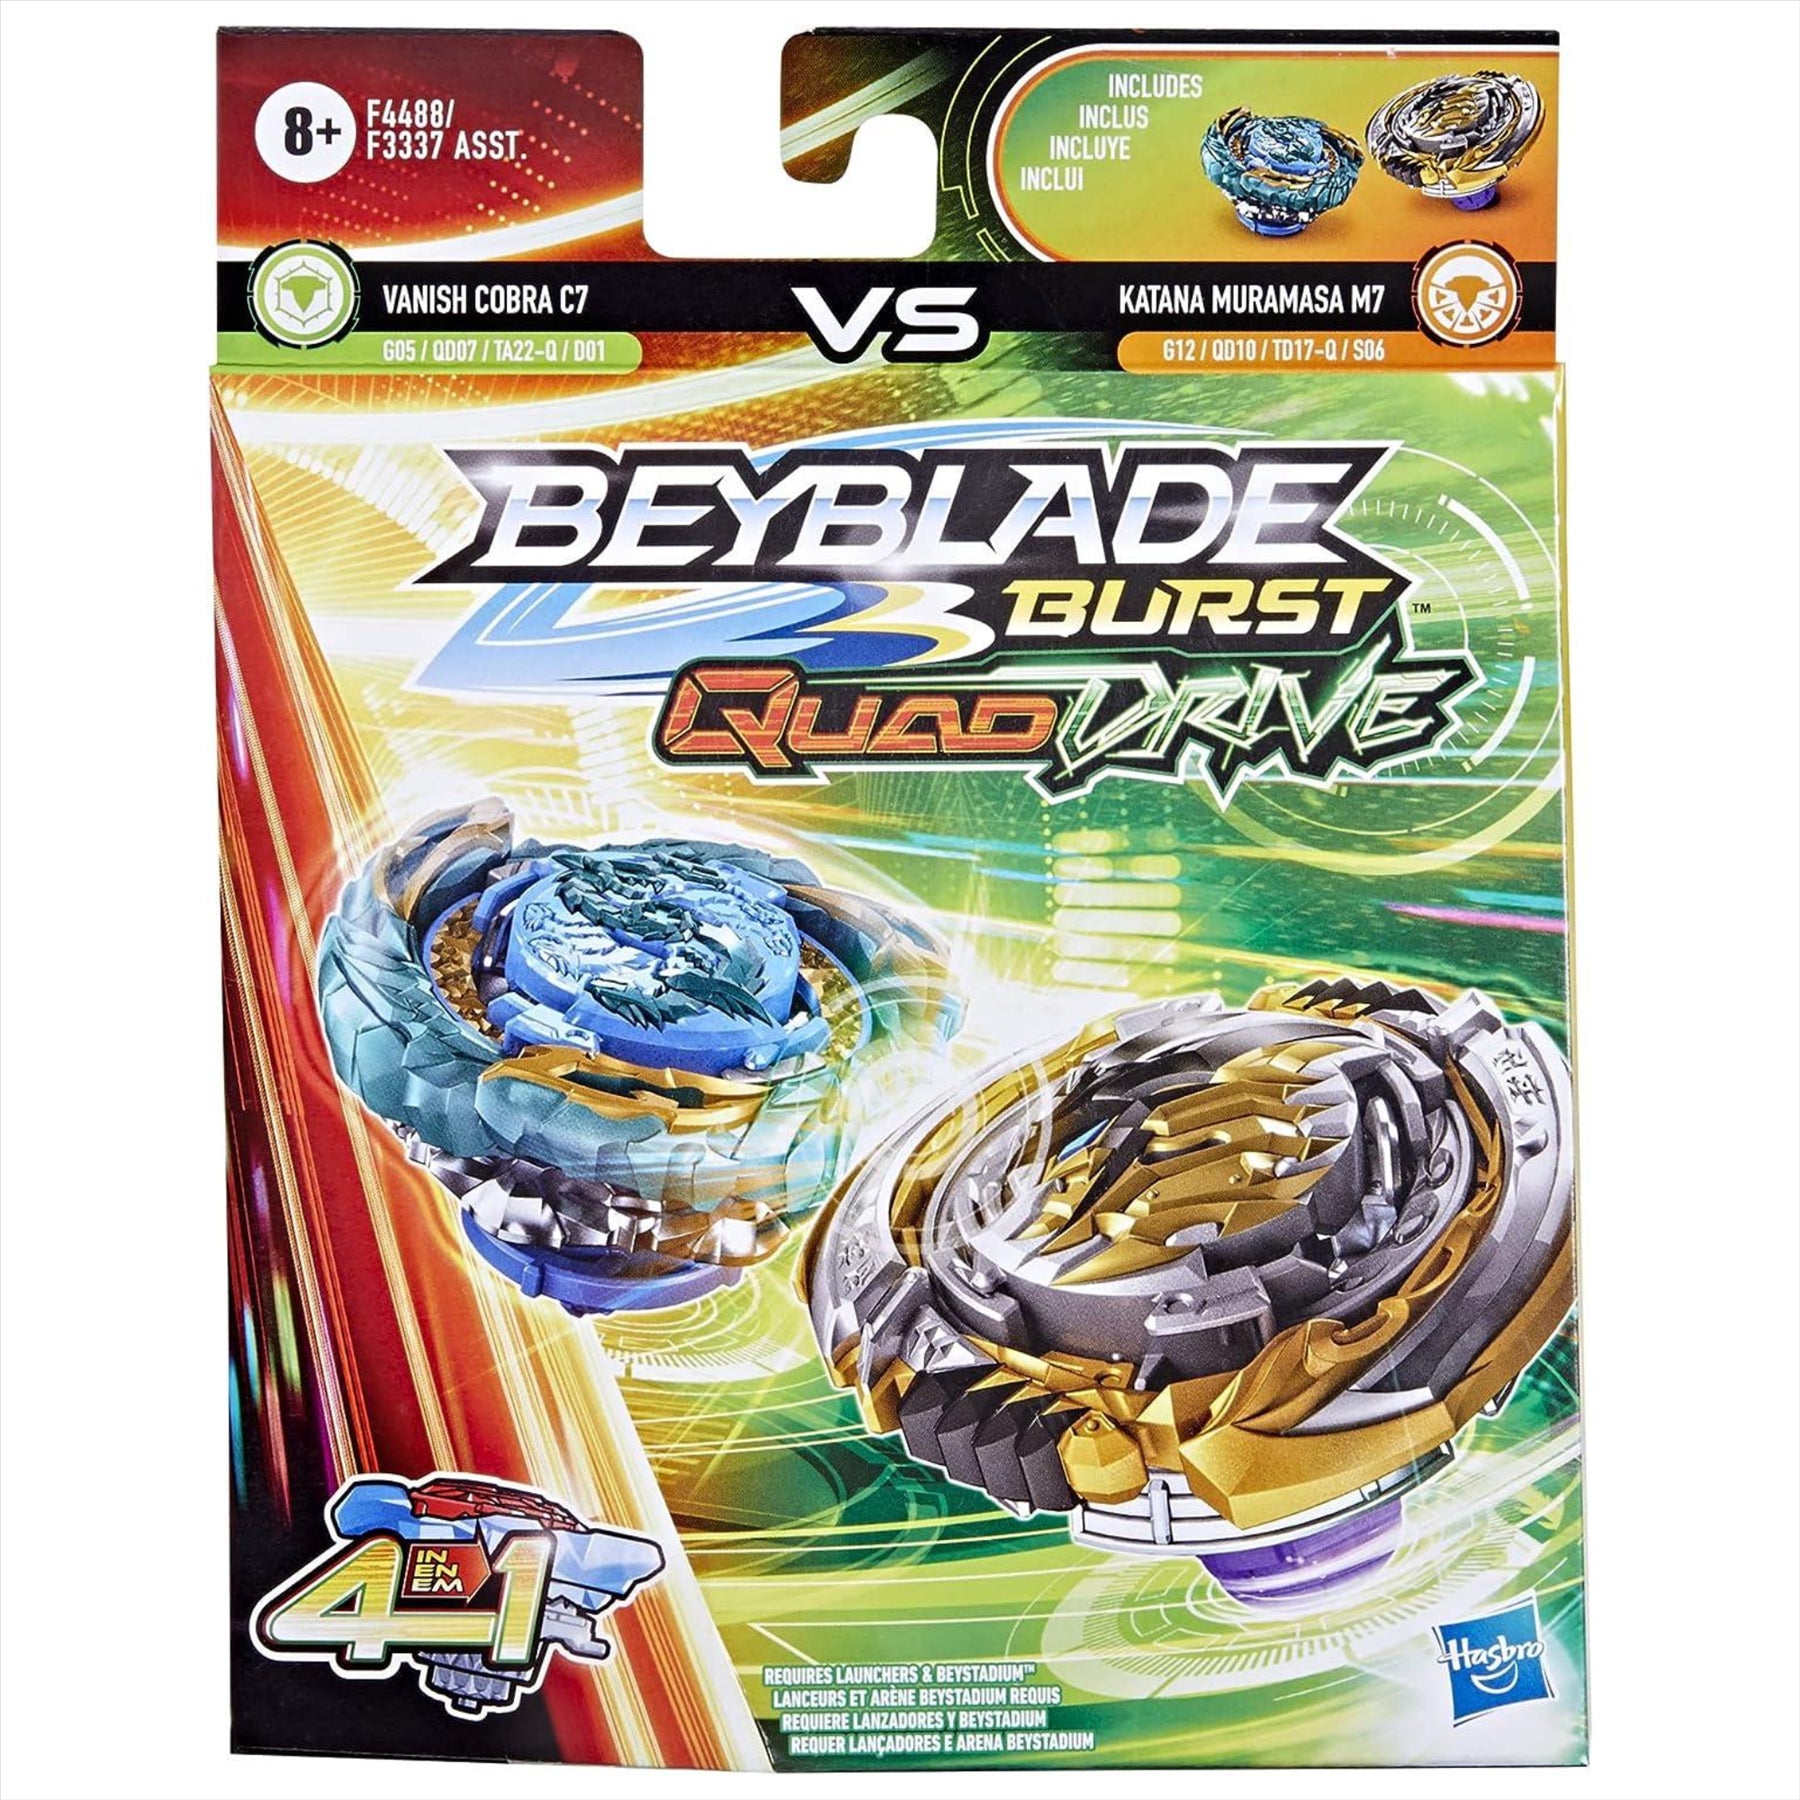 BEYBLADE Hasbro Burst QuadDrive Katana Muramasa M7 and Vanish Cobra C7 Spinning Top Dual Pack - 2 Battling Game Top Toy for Kids Ages 8 and Up - Toptoys2u